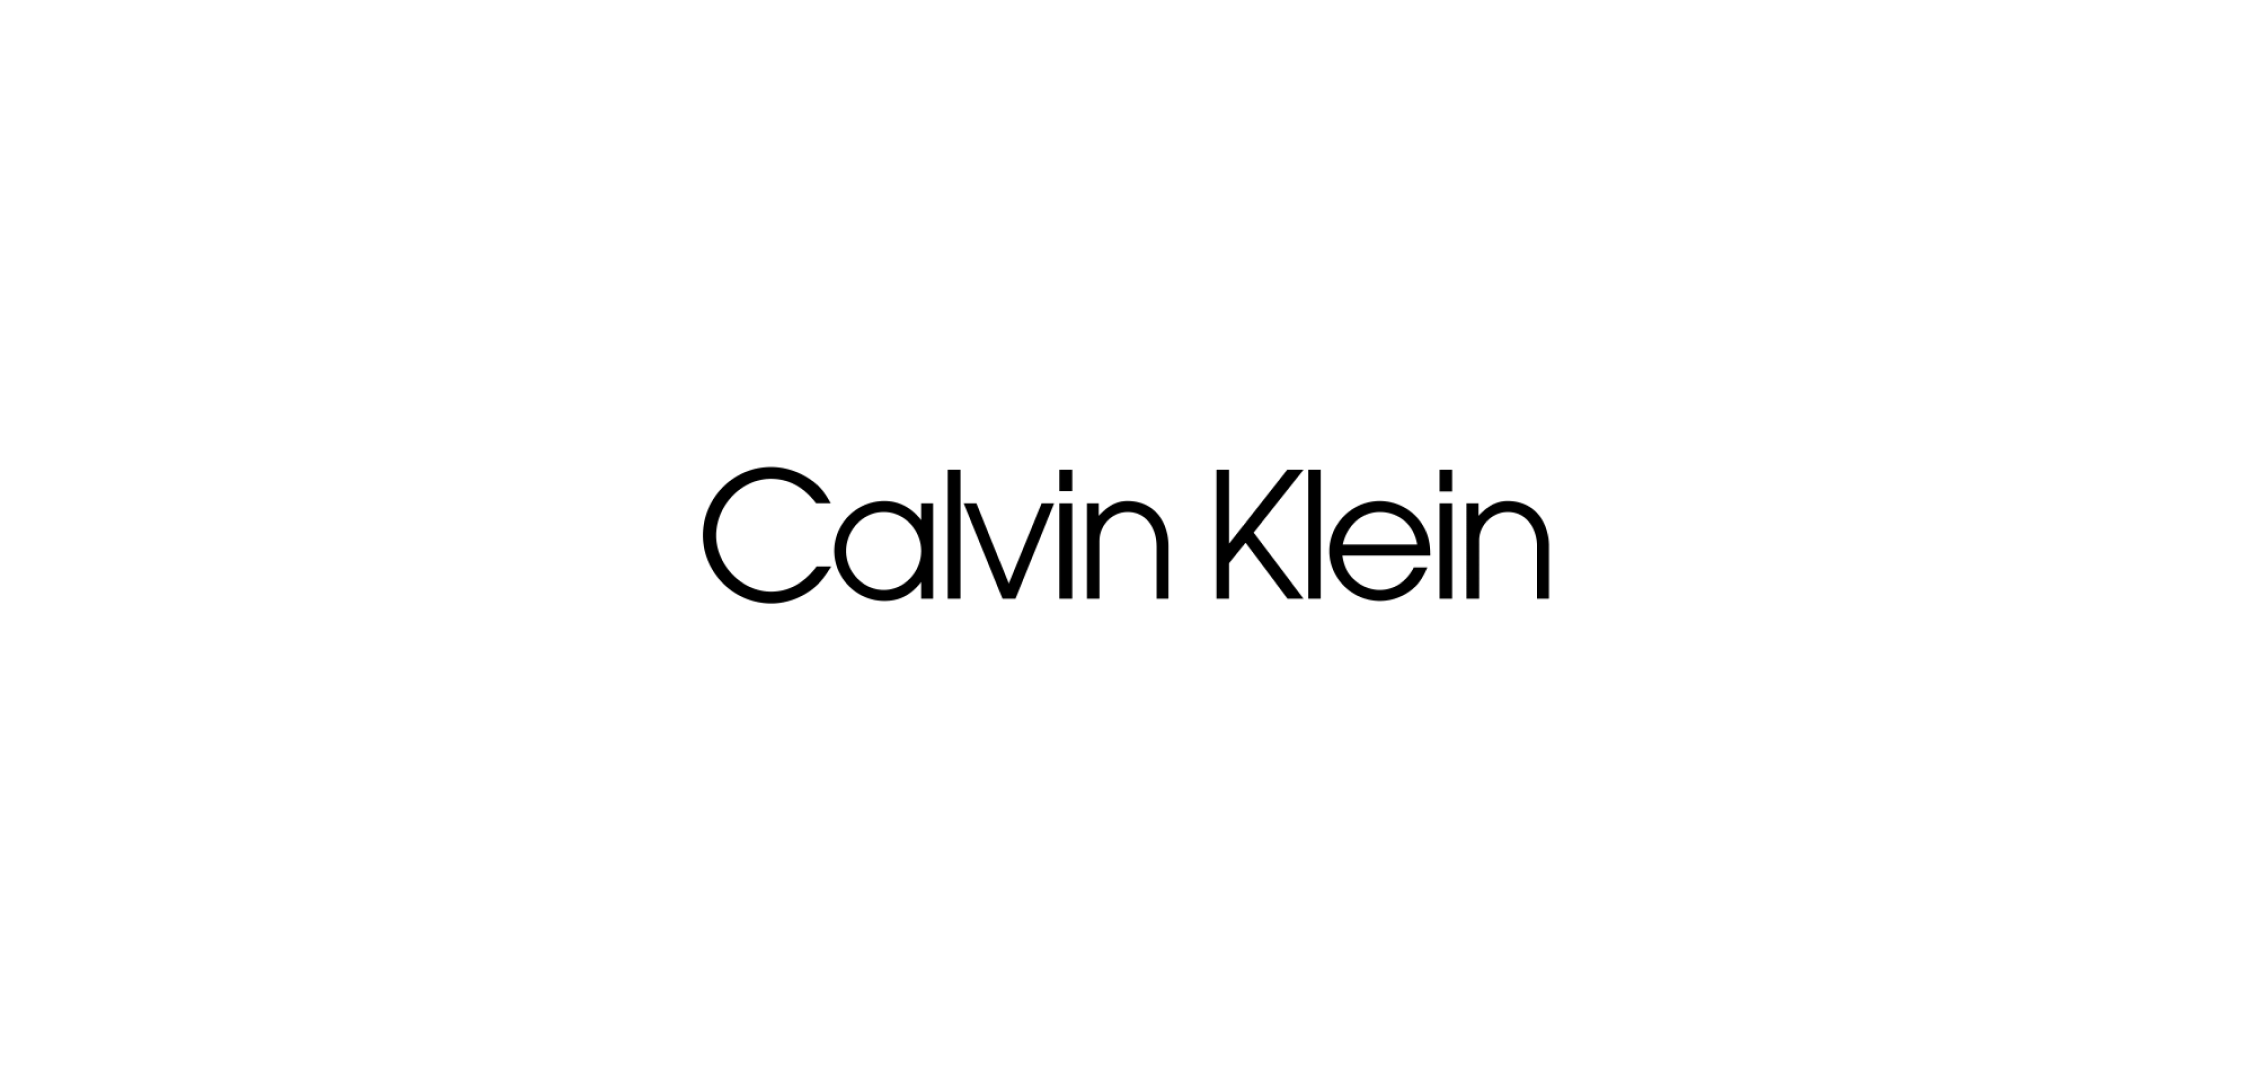 MS SDM | Calvin Klein 2022 - MS Strategic Design & Management